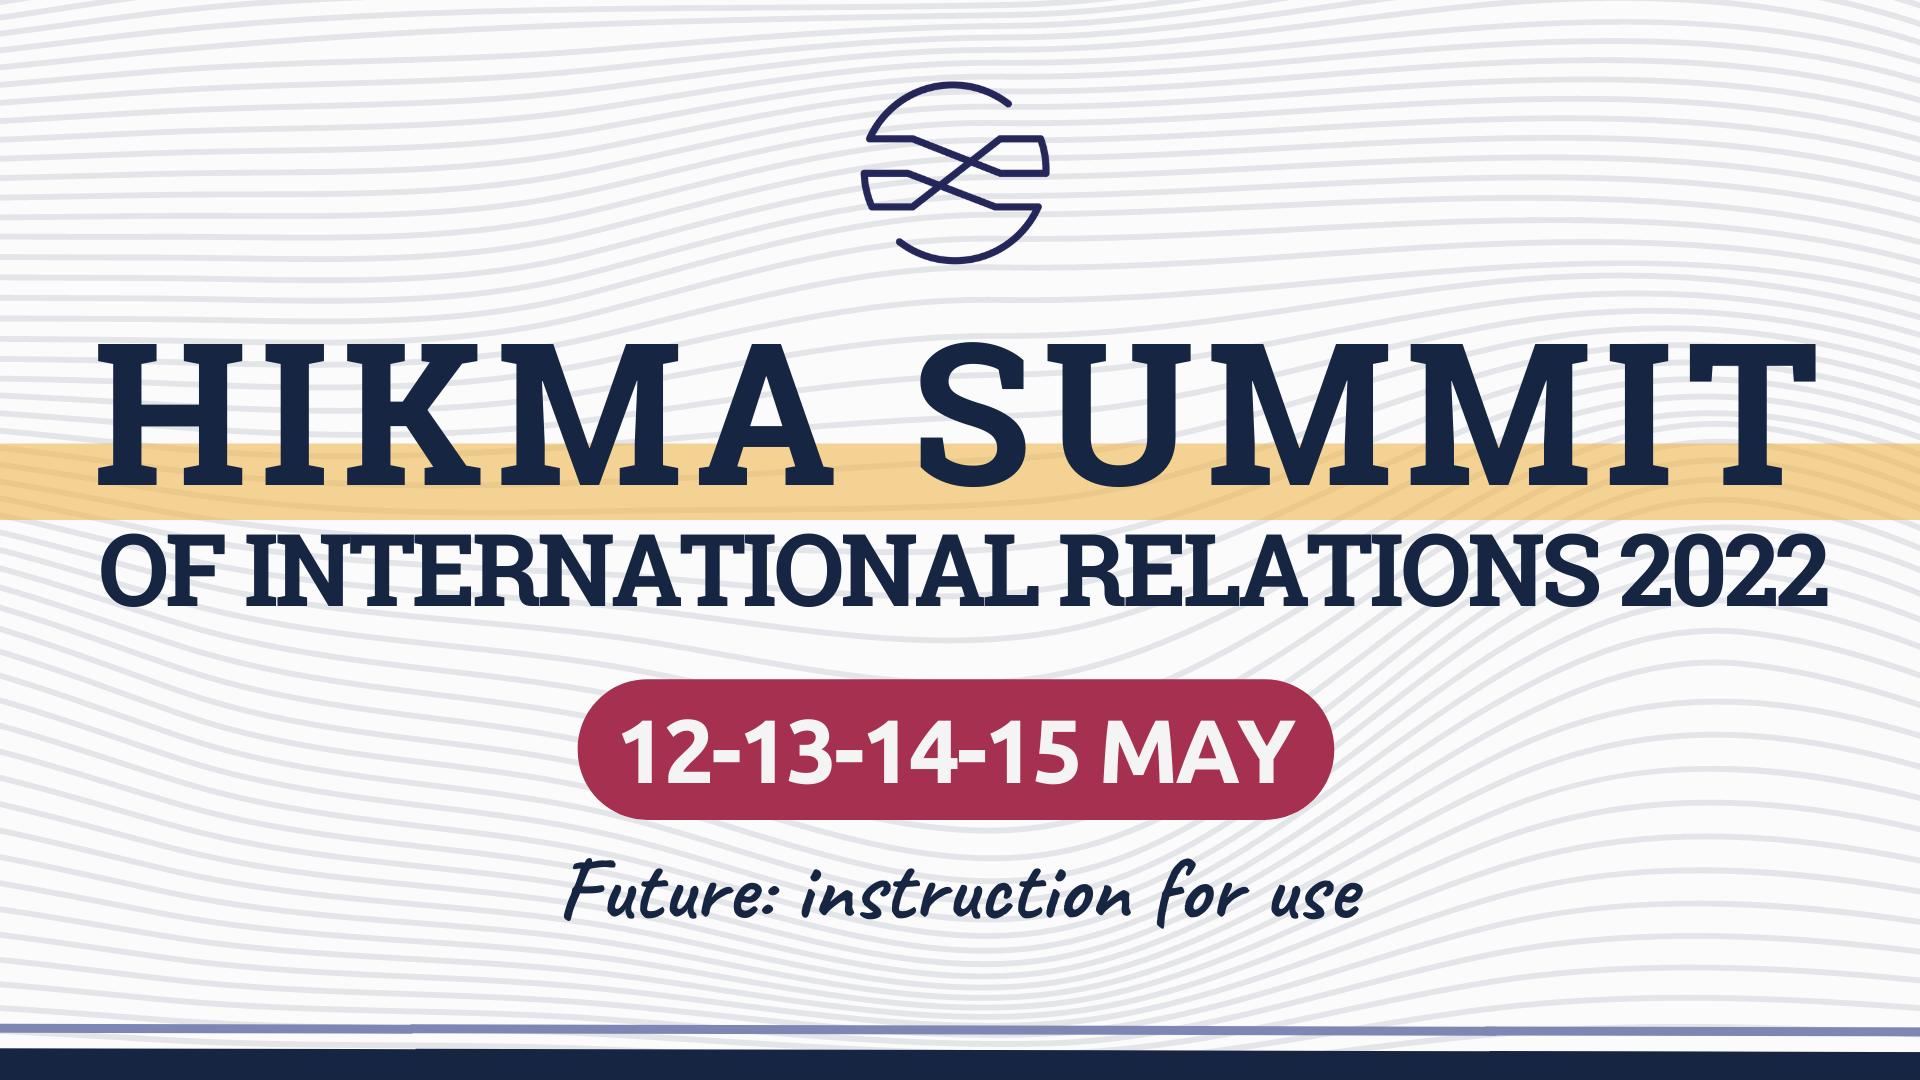 Hikma Summit of International Relations